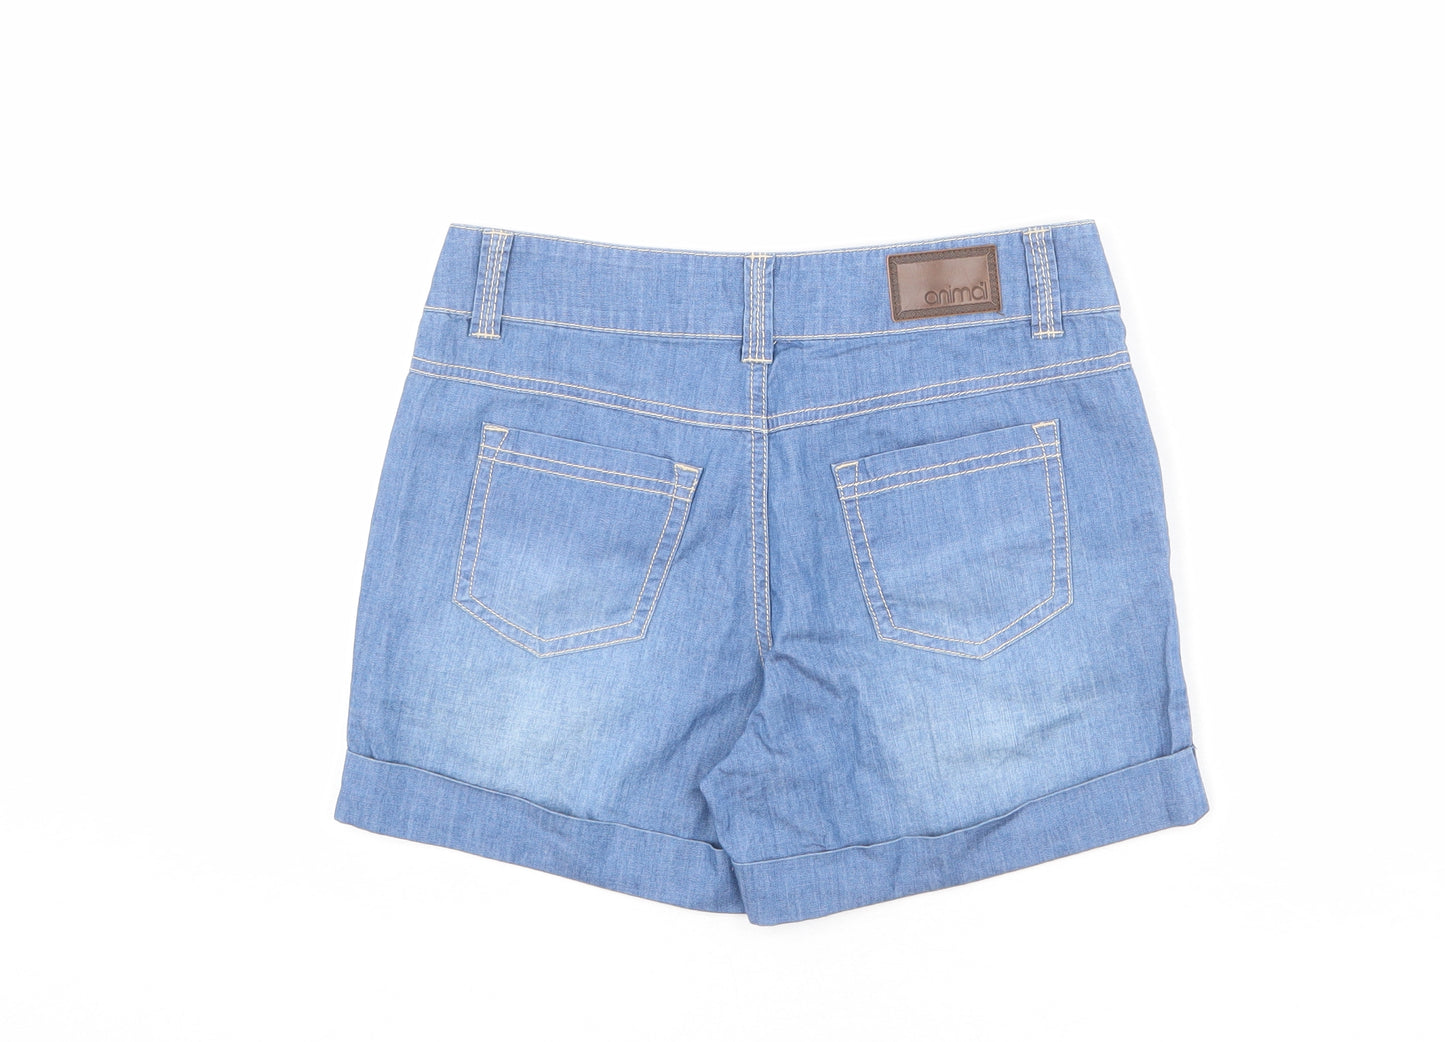 Animal Womens Blue Cotton Hot Pants Shorts Size 8 L4 in Regular Zip